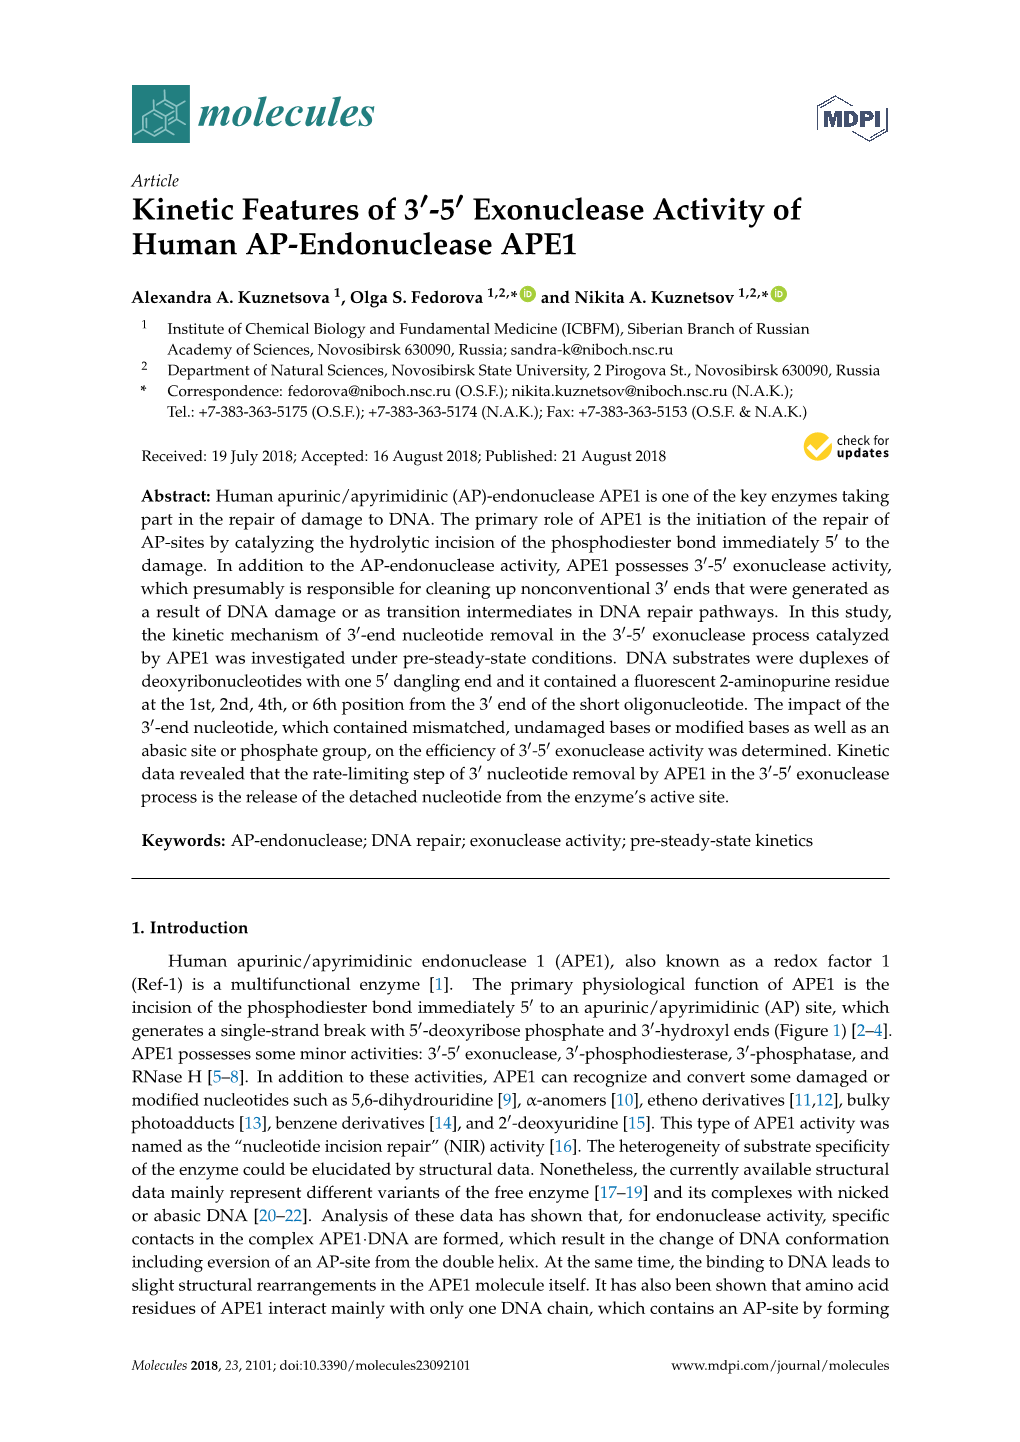 5' Exonuclease Activity of Human AP